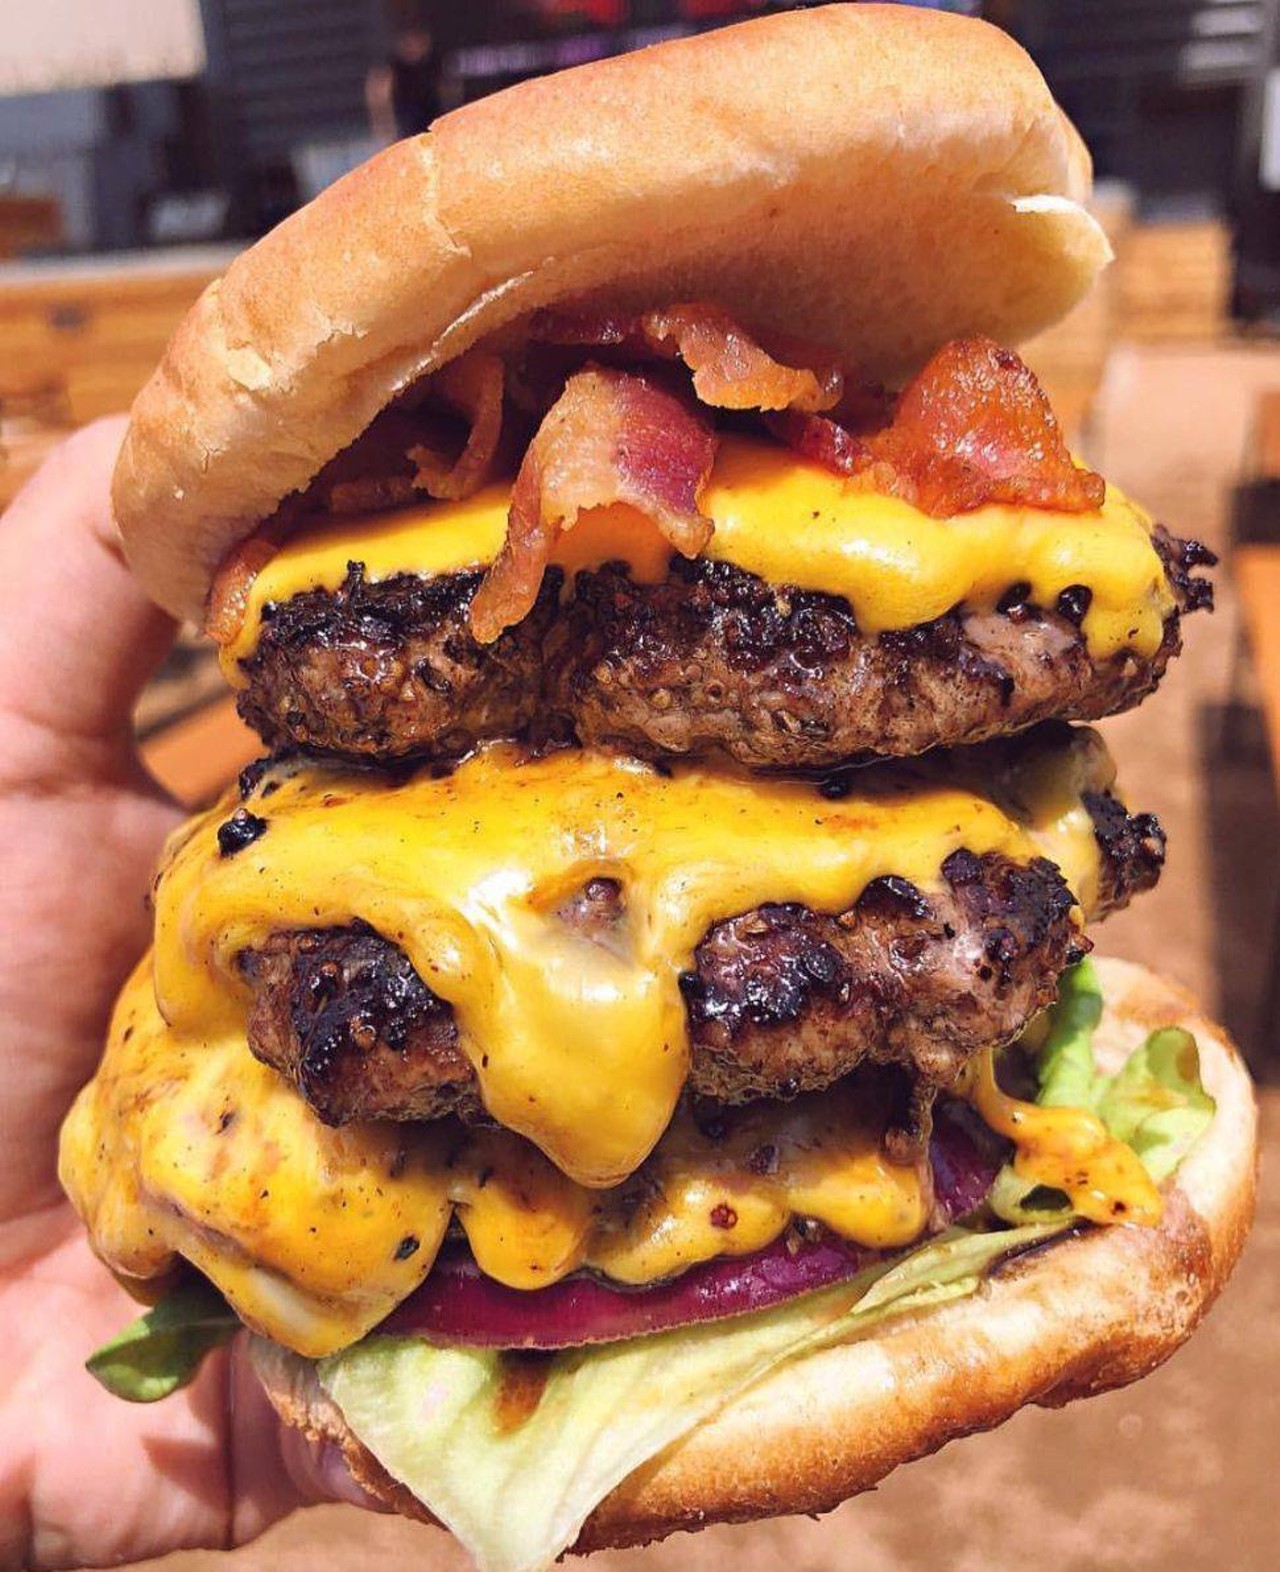 Knife Burger 
4040 Central Florida Parkway
Three-time James Beard Award winner chef John Tesar will open a burger joint this year. Knife Burger will feature affordable burgers, hot dogs and milkshakes. 
Photo via Knife Burger/Facebook